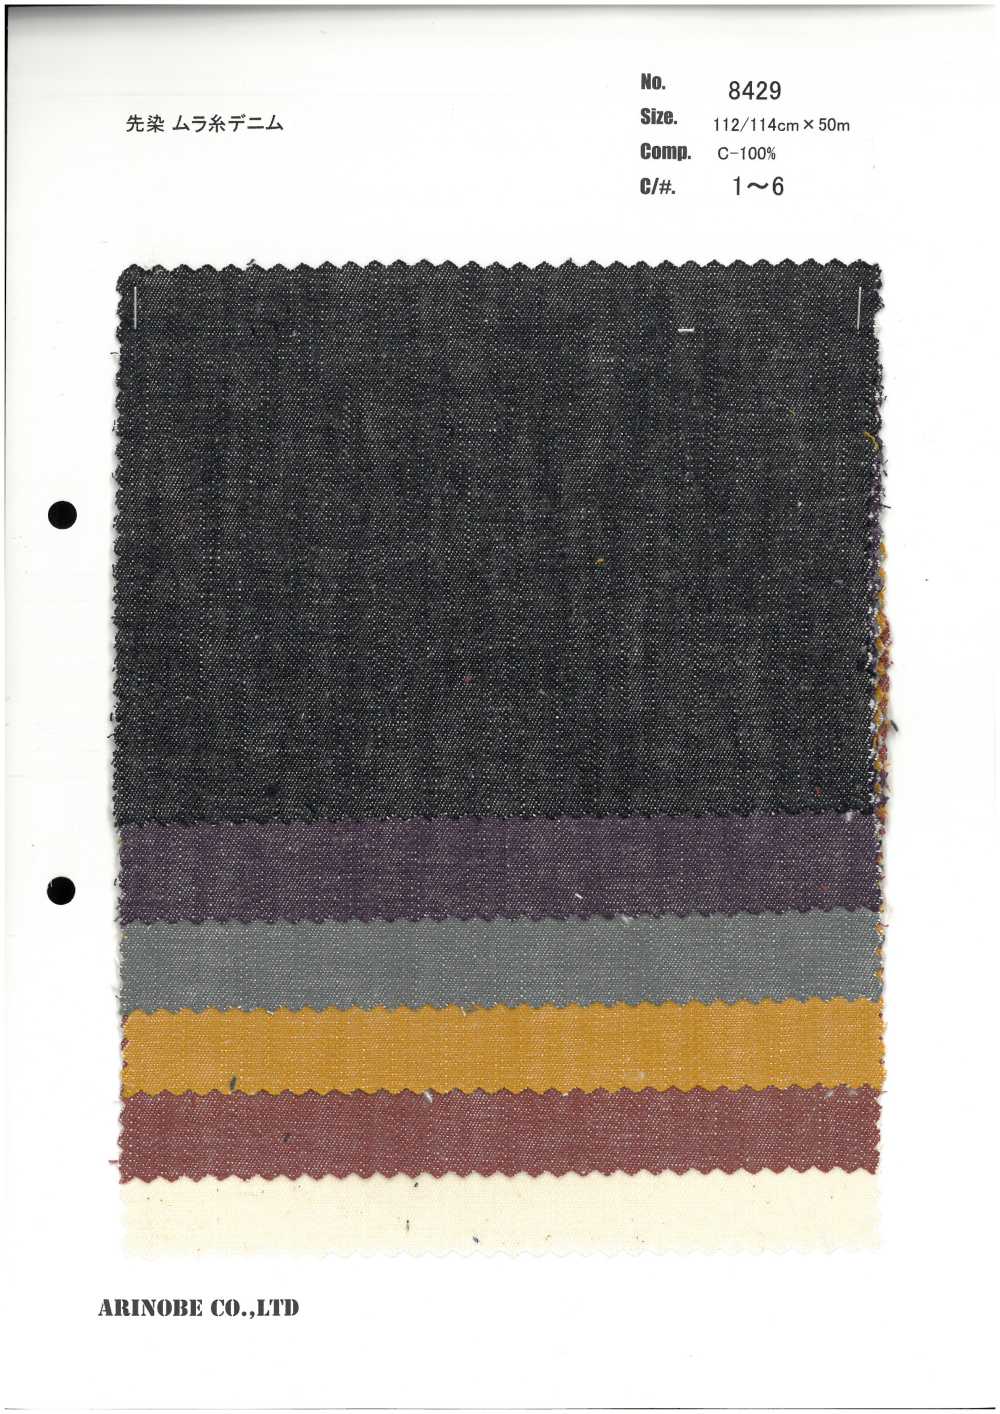 8429 Denim à Fil Irrégulier Teint En Fil[Fabrication De Textile] ARINOBE CO., LTD.